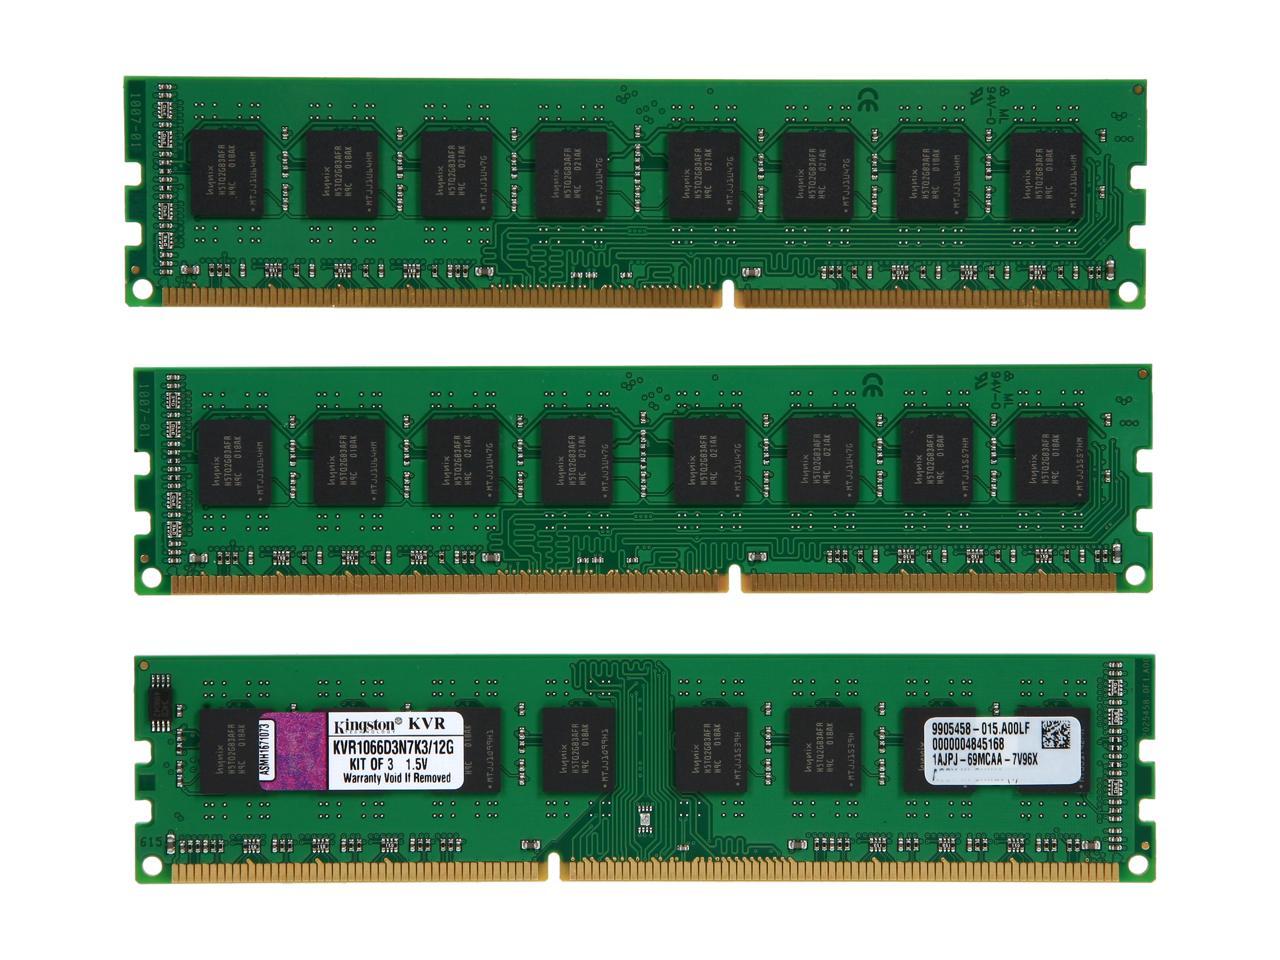 PC3-10600 2GB DDR3-1333 RAM Memory Upgrade for The Gigabyte GA-EX58 Series GA-EX58-DS4